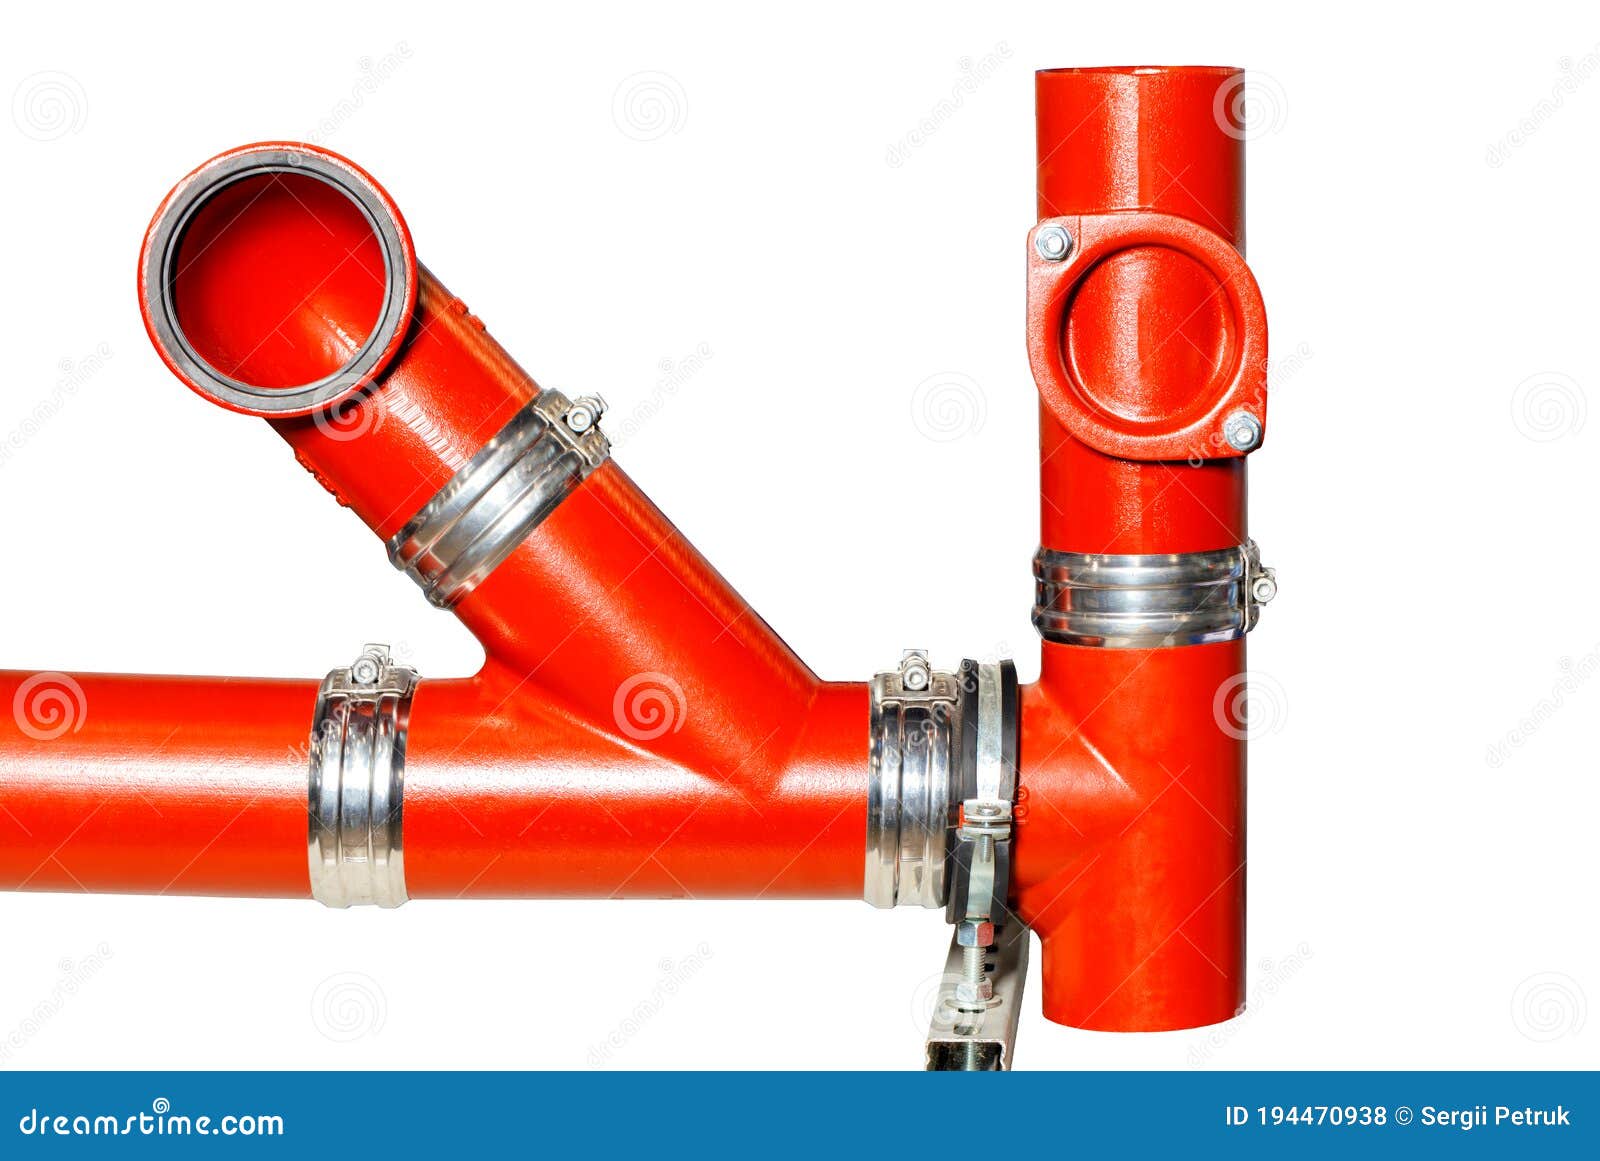 sanitation pipes